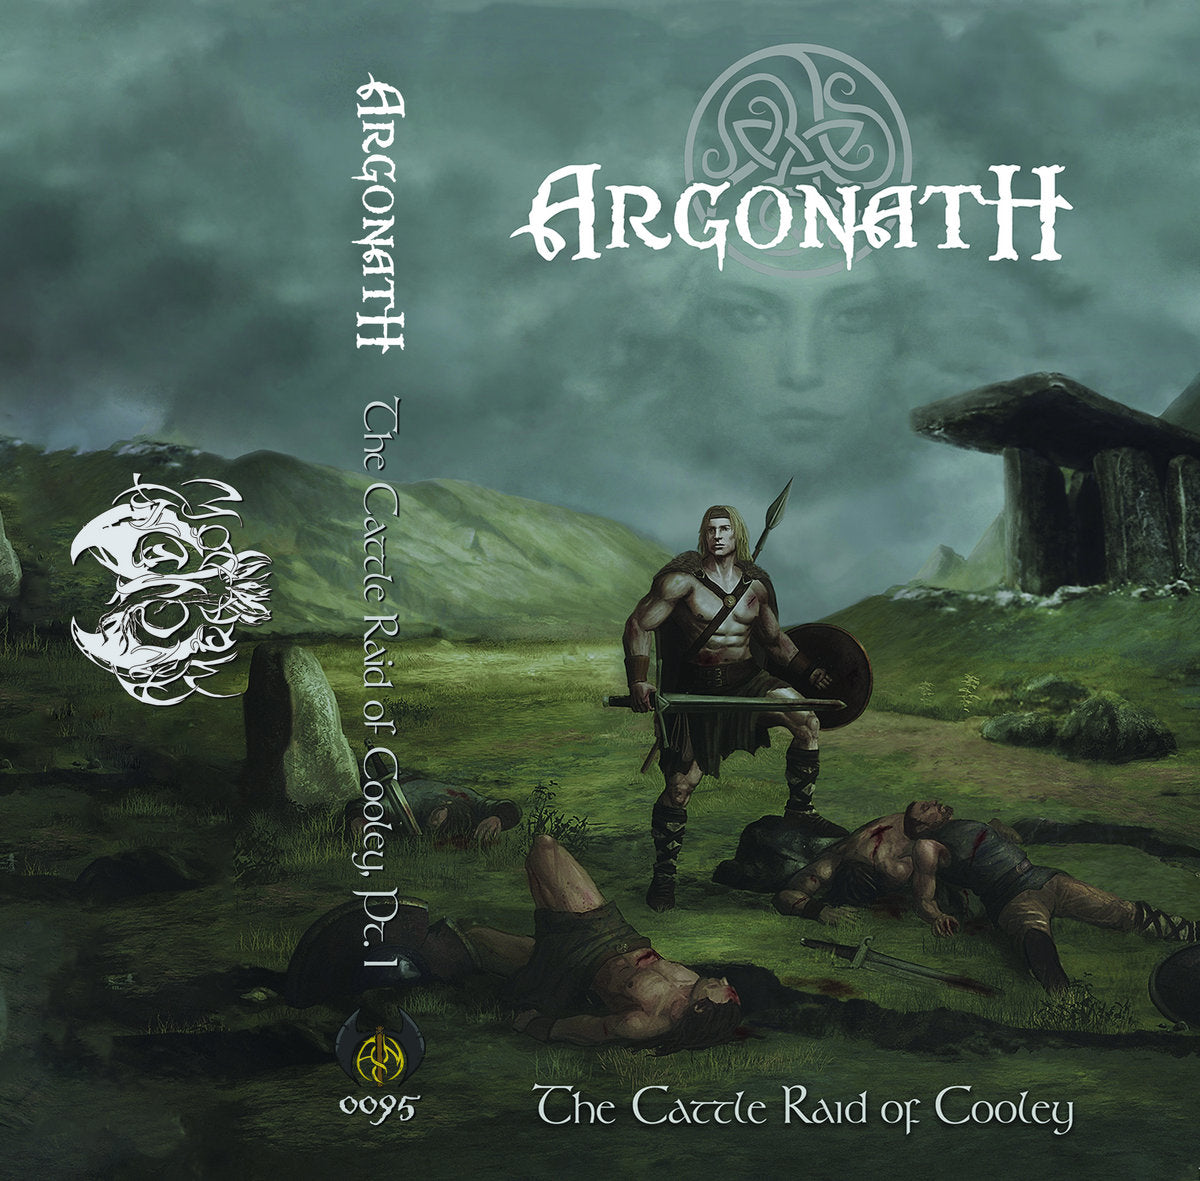 ARGONATH "The Cattle Raid of Cooley" Double Cassette Tape (w/ slipcase)